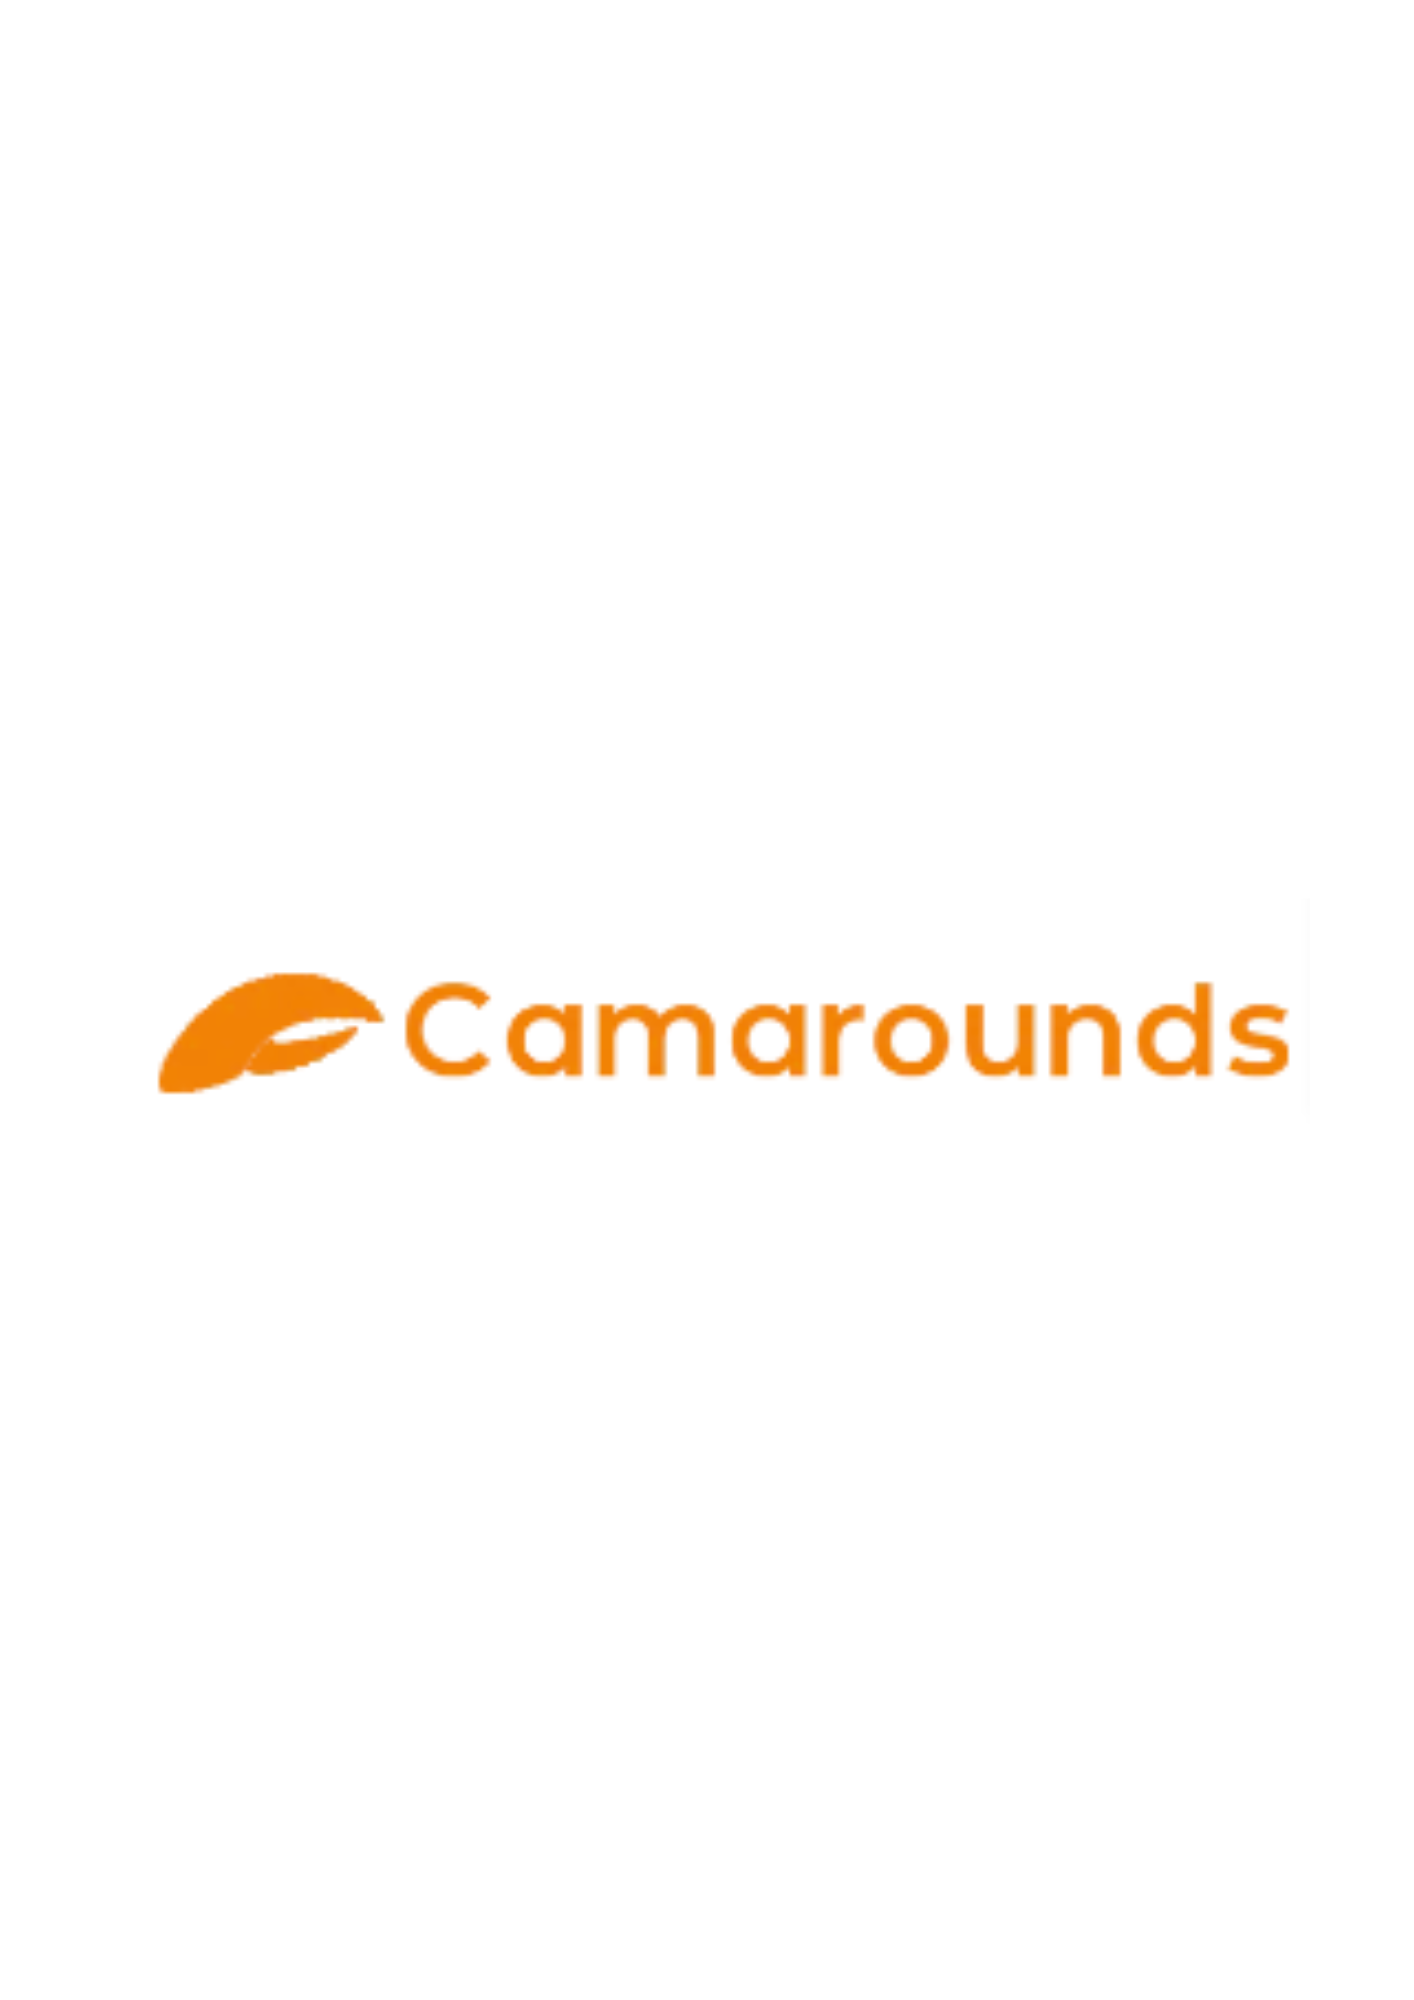 Camarounds